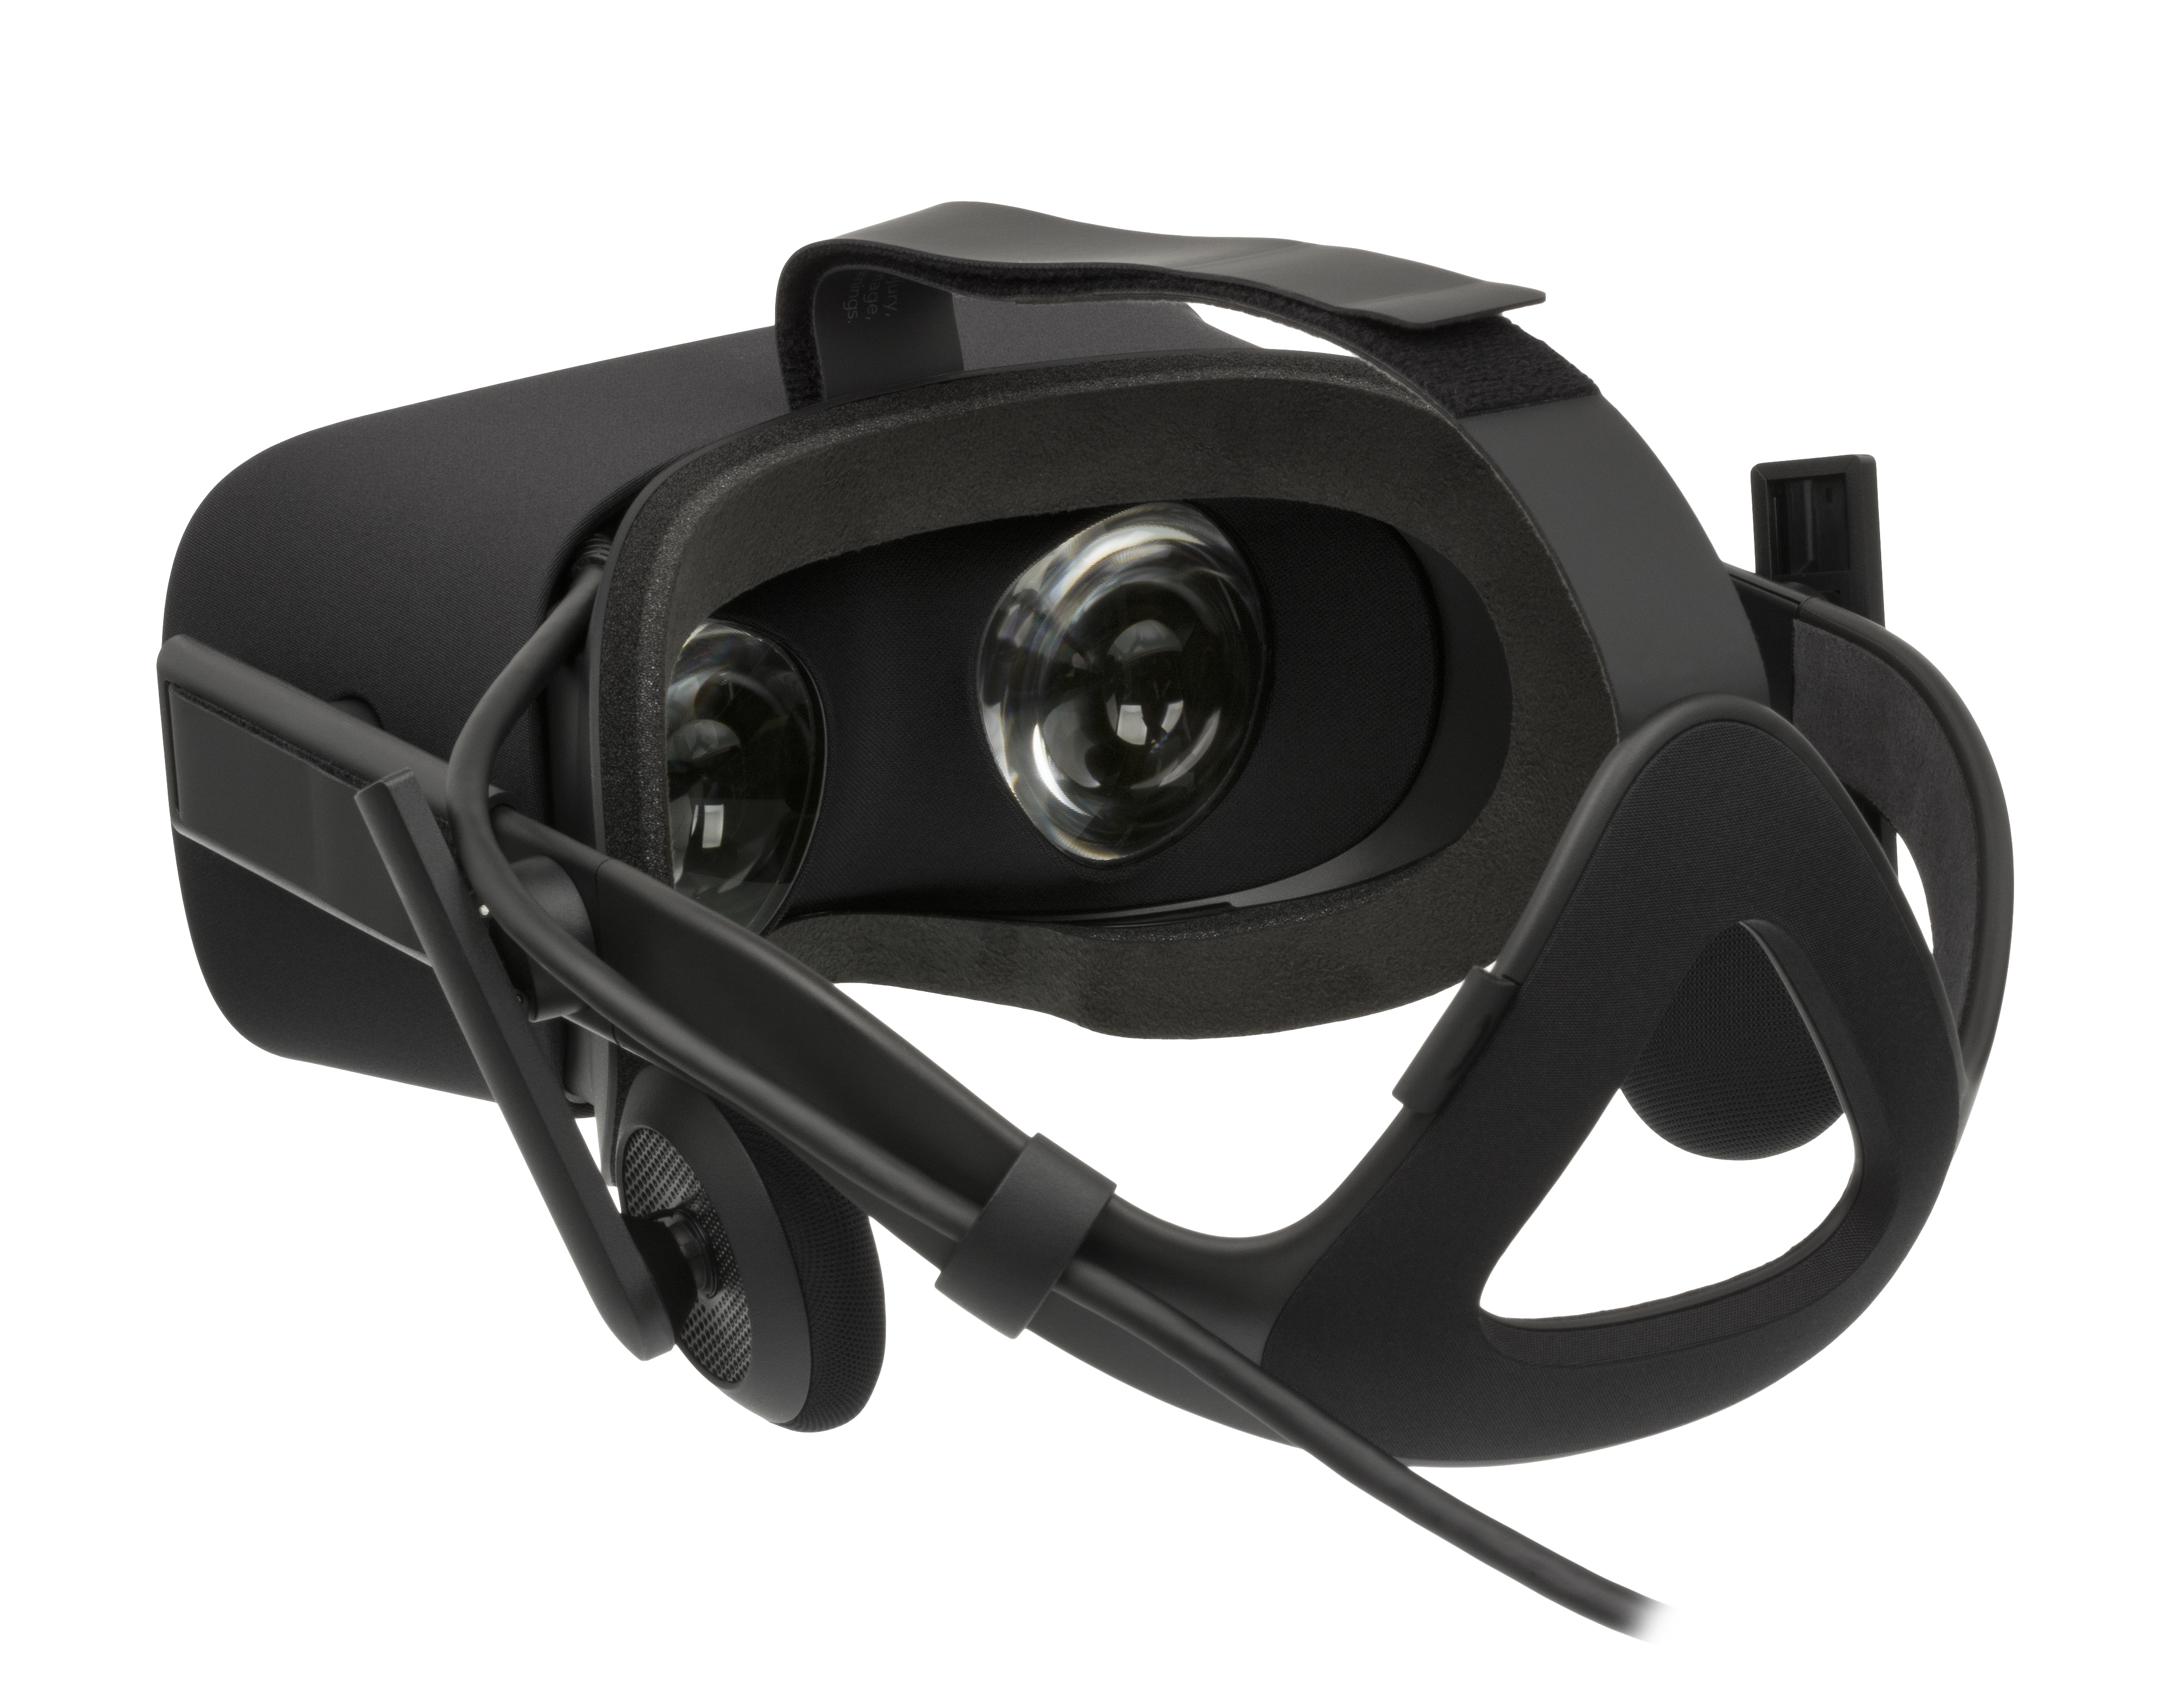 Kurve Disse Transcend Virtual reality headset - Wikipedia